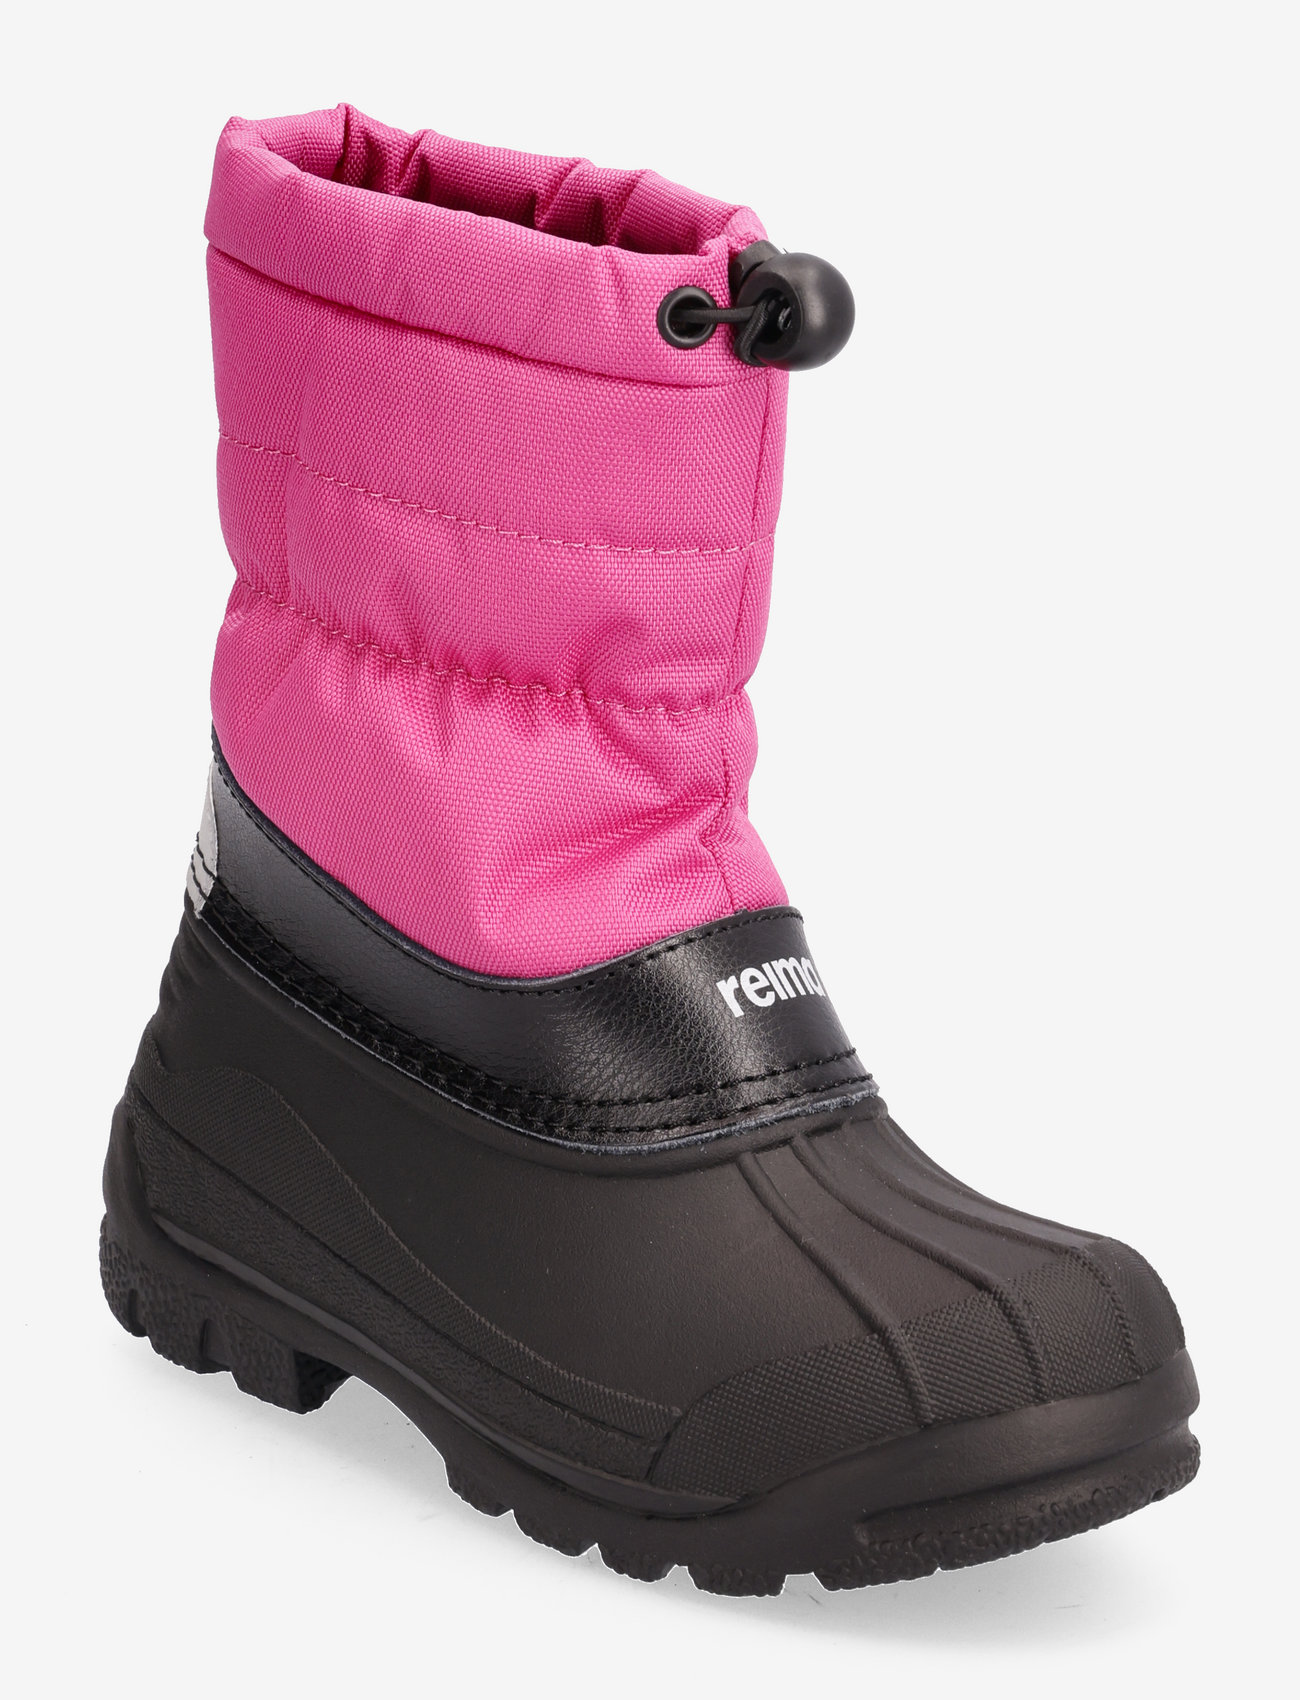 Reima - Winter boots, Nefar - kinder - magenta purple - 0